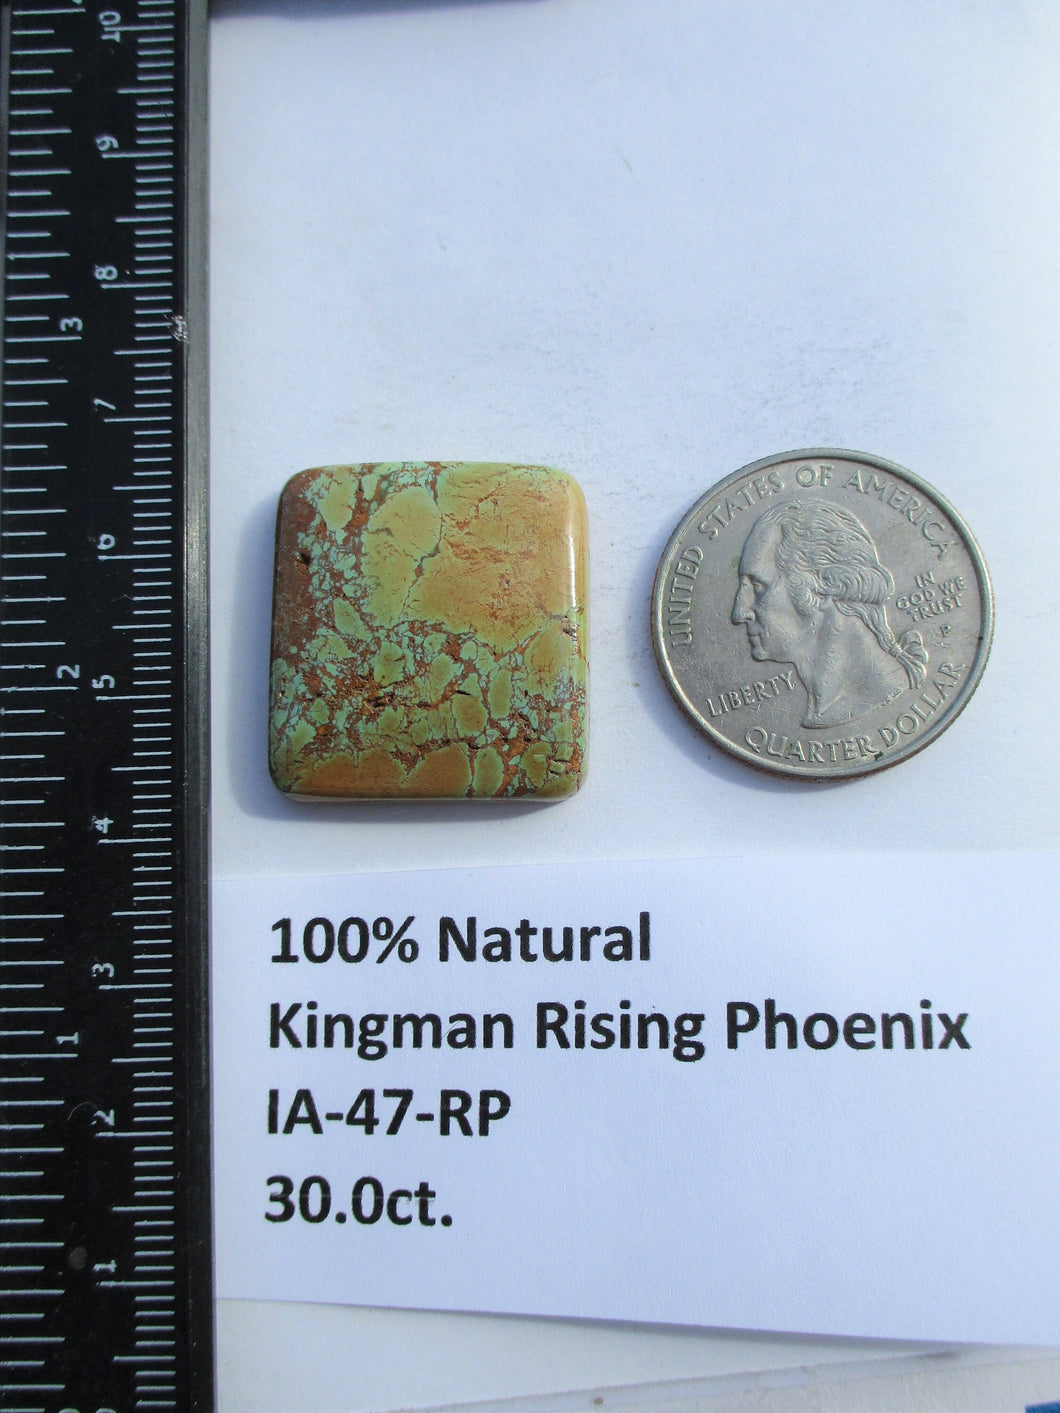 30.0 ct. (25x23x5 mm) 100% Natural Kingman Rising Phoenix Turquoise Cabochon Gemstone, # IA 47